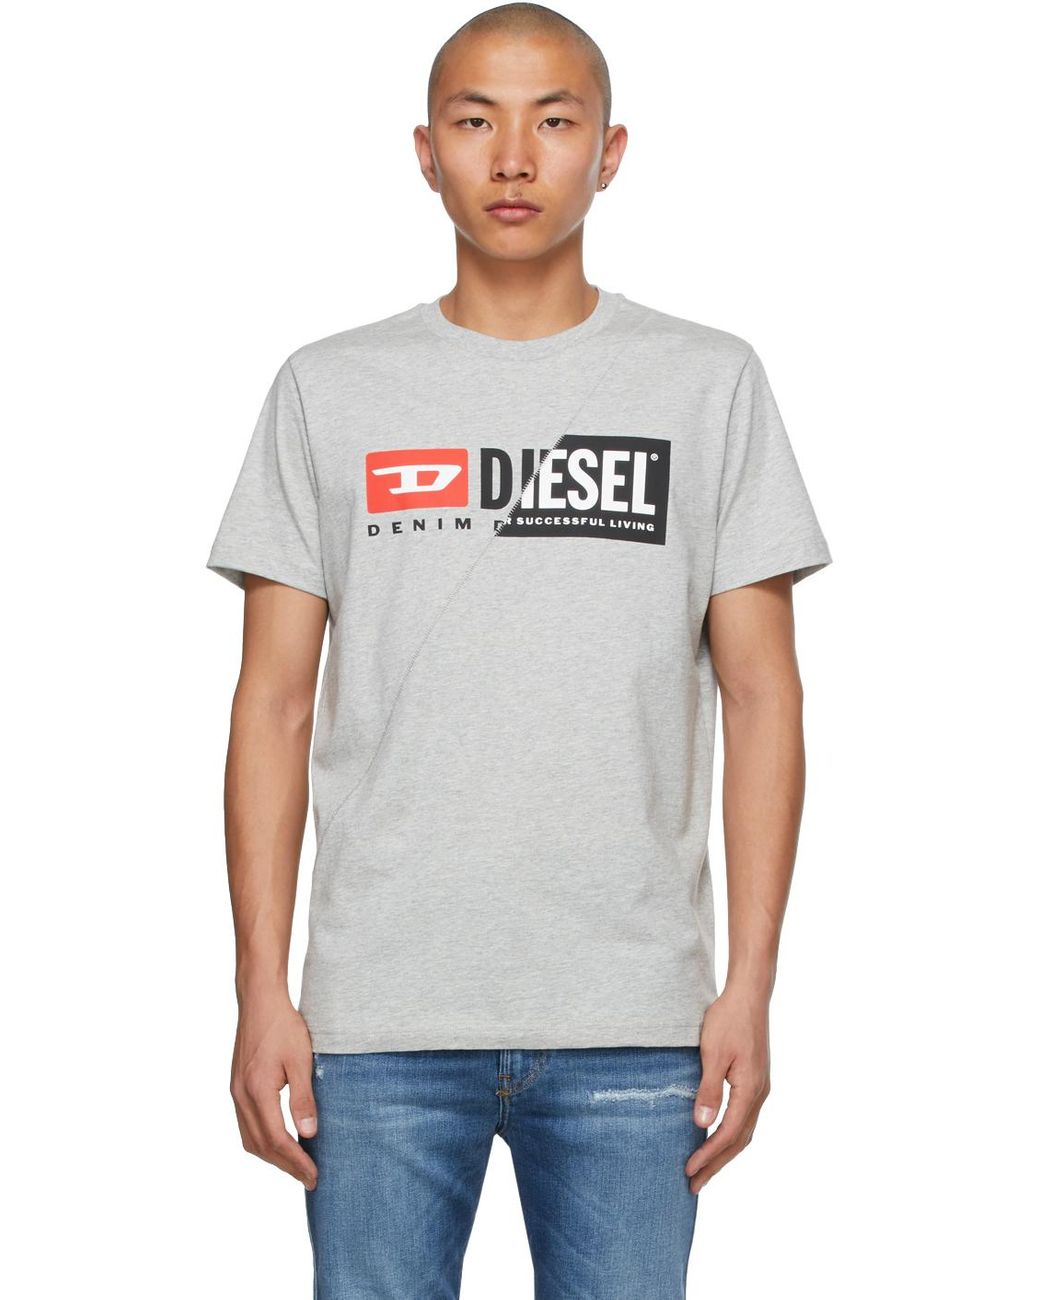 DIESEL Cotton Grey Diego-cuty T-shirt in Gray for Men | Lyst